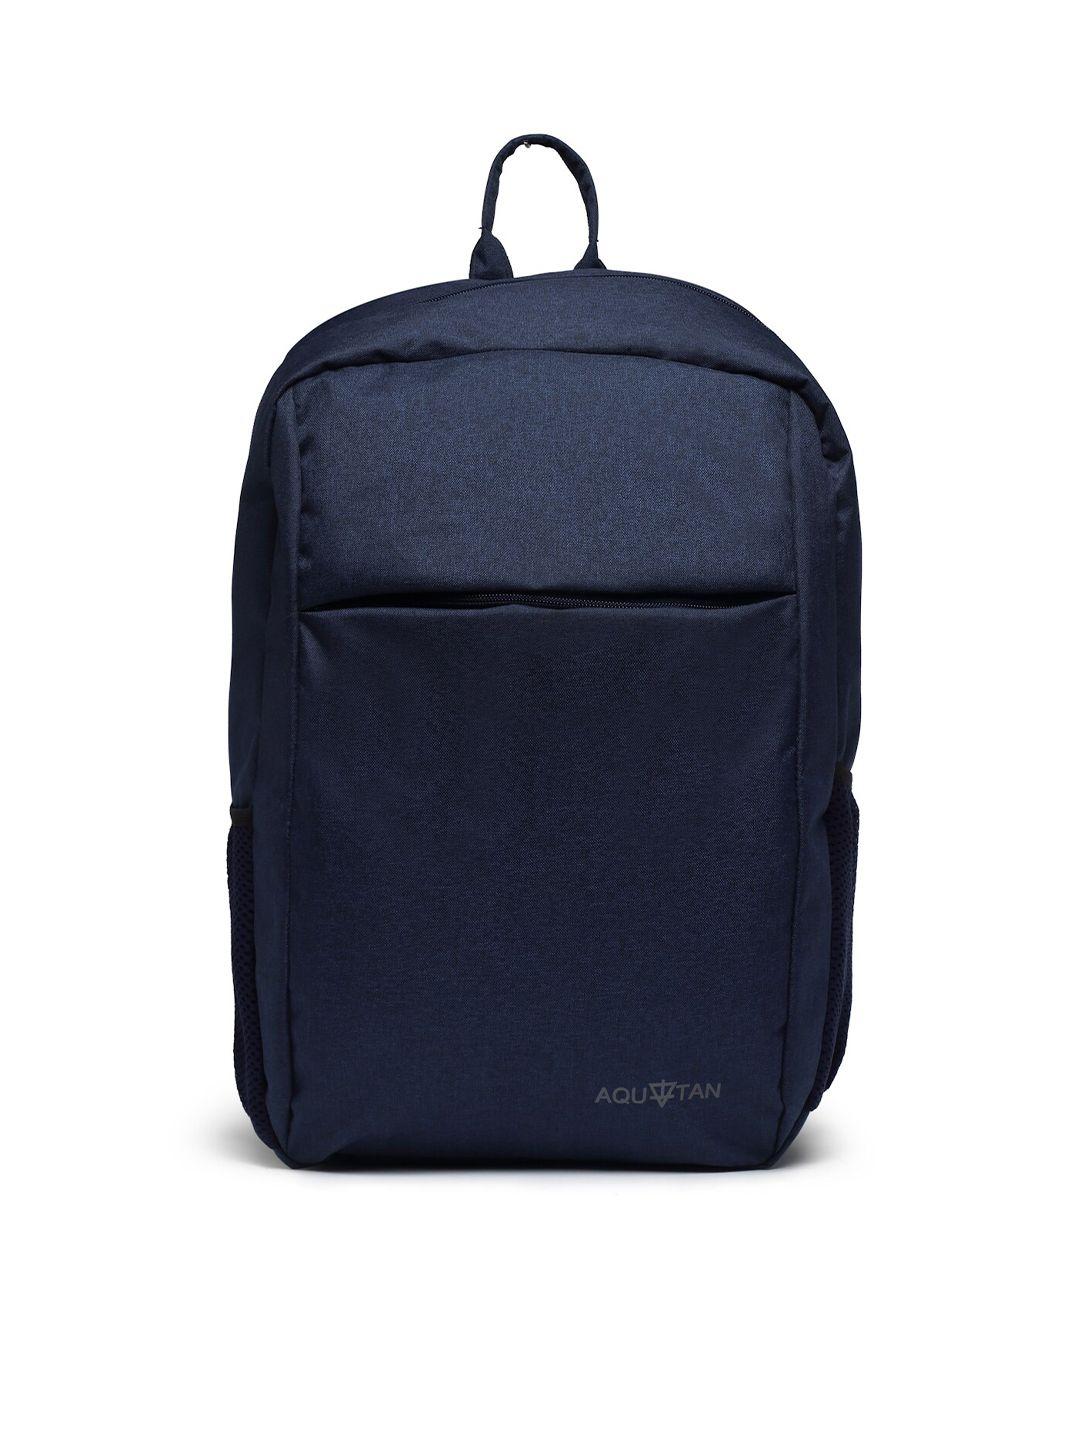 aquatan men laptop backpack